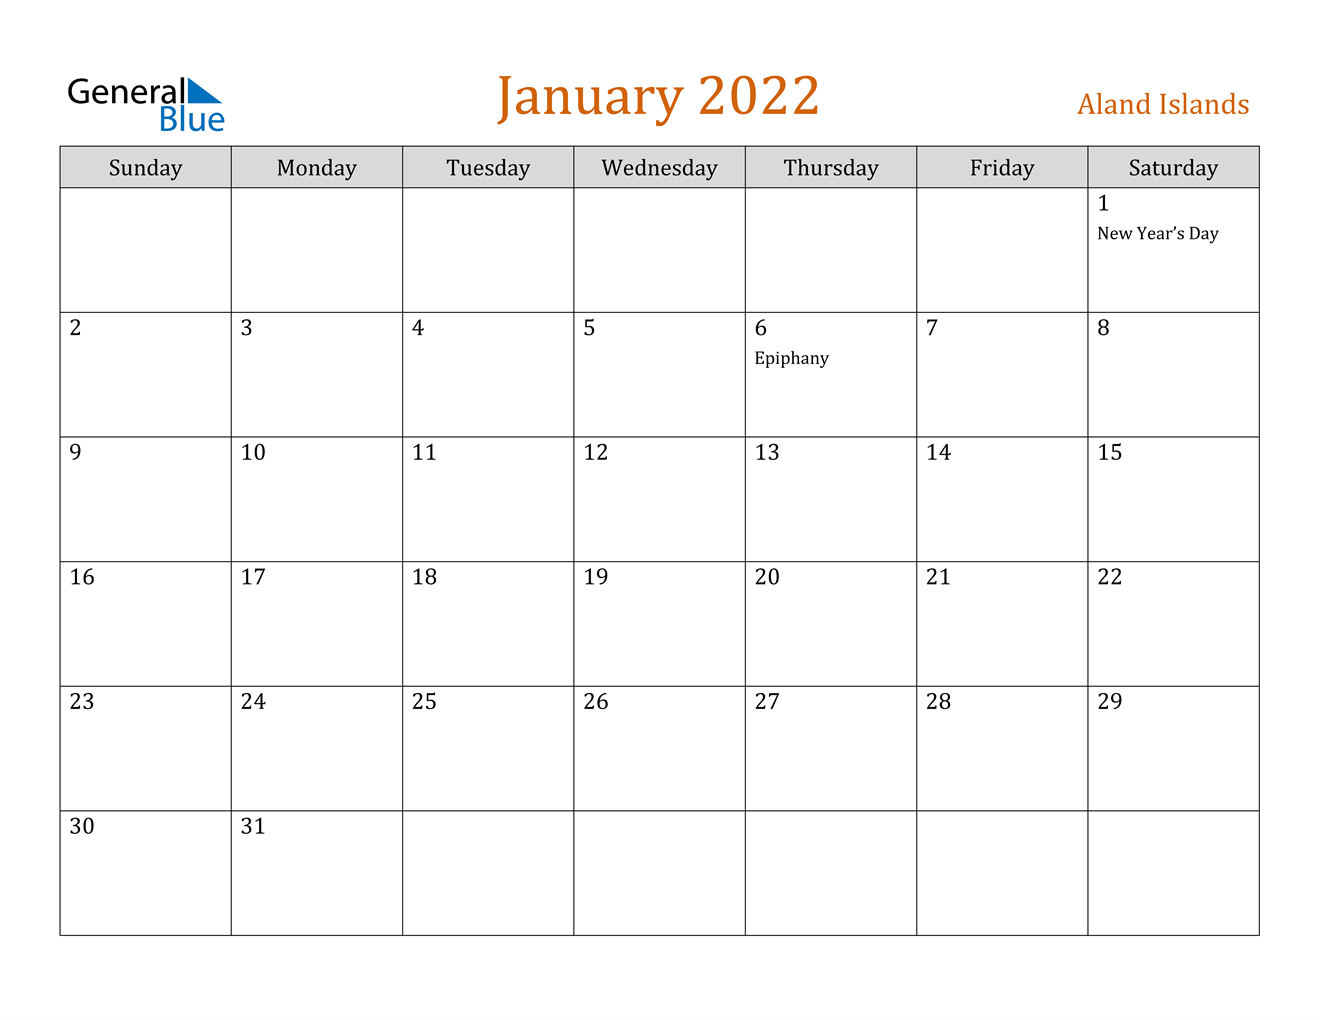 January 2022 Calendar - Aland Islands